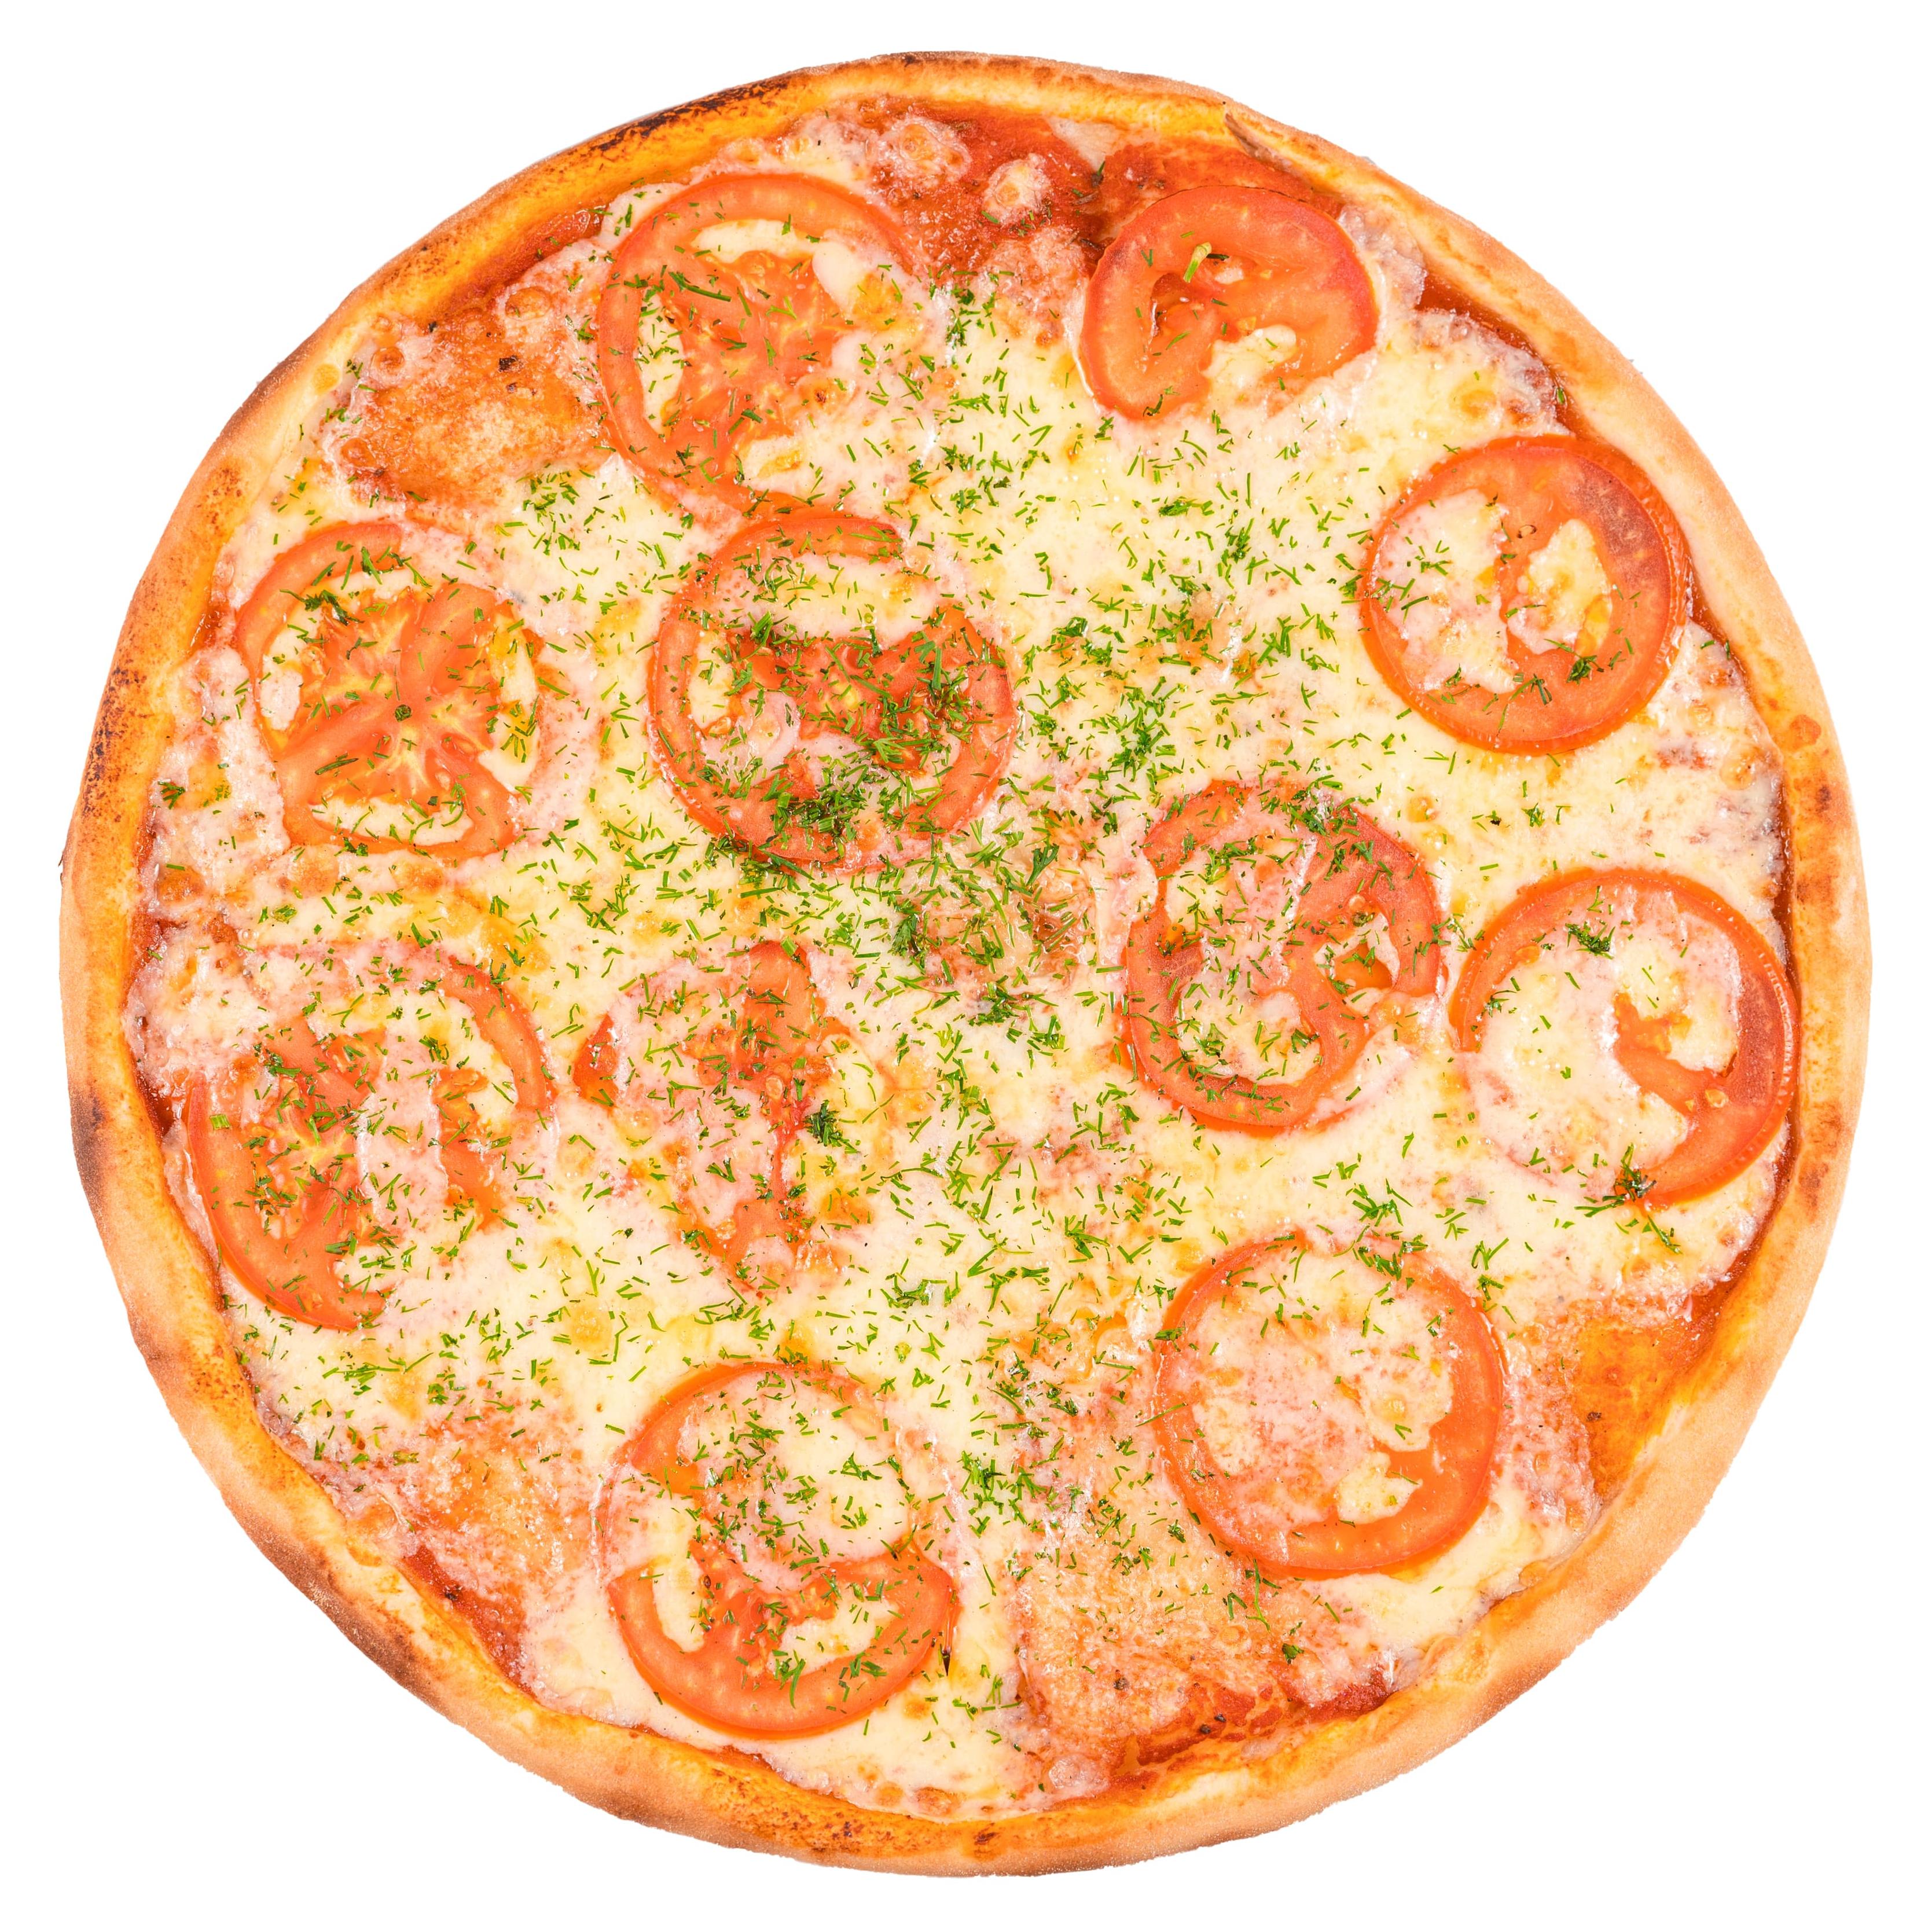 технологическая карта пицца маргарита 40 см фото 82